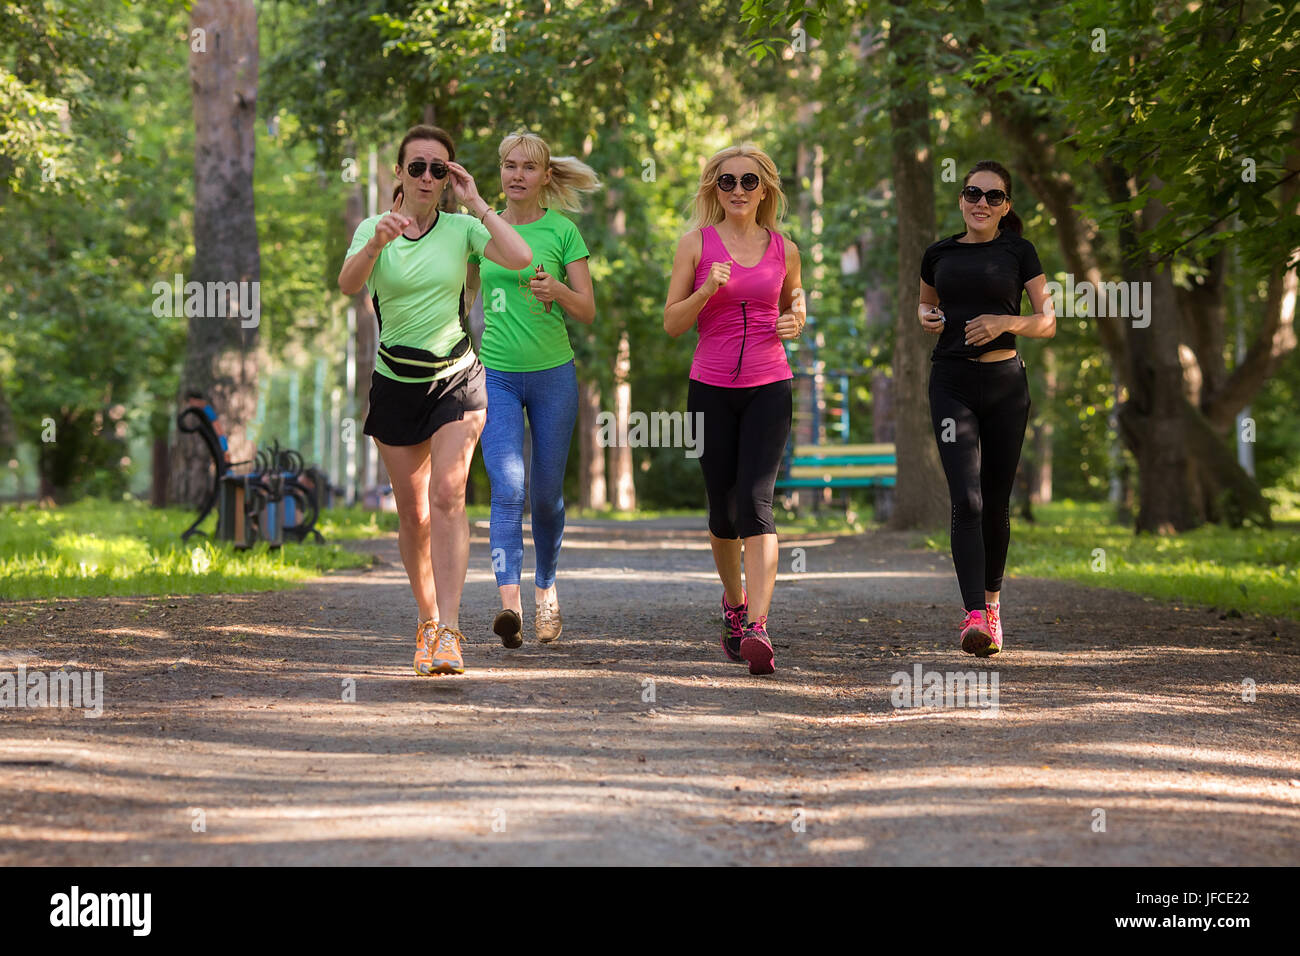 https://c8.alamy.com/comp/JFCE22/women-running-in-park-JFCE22.jpg